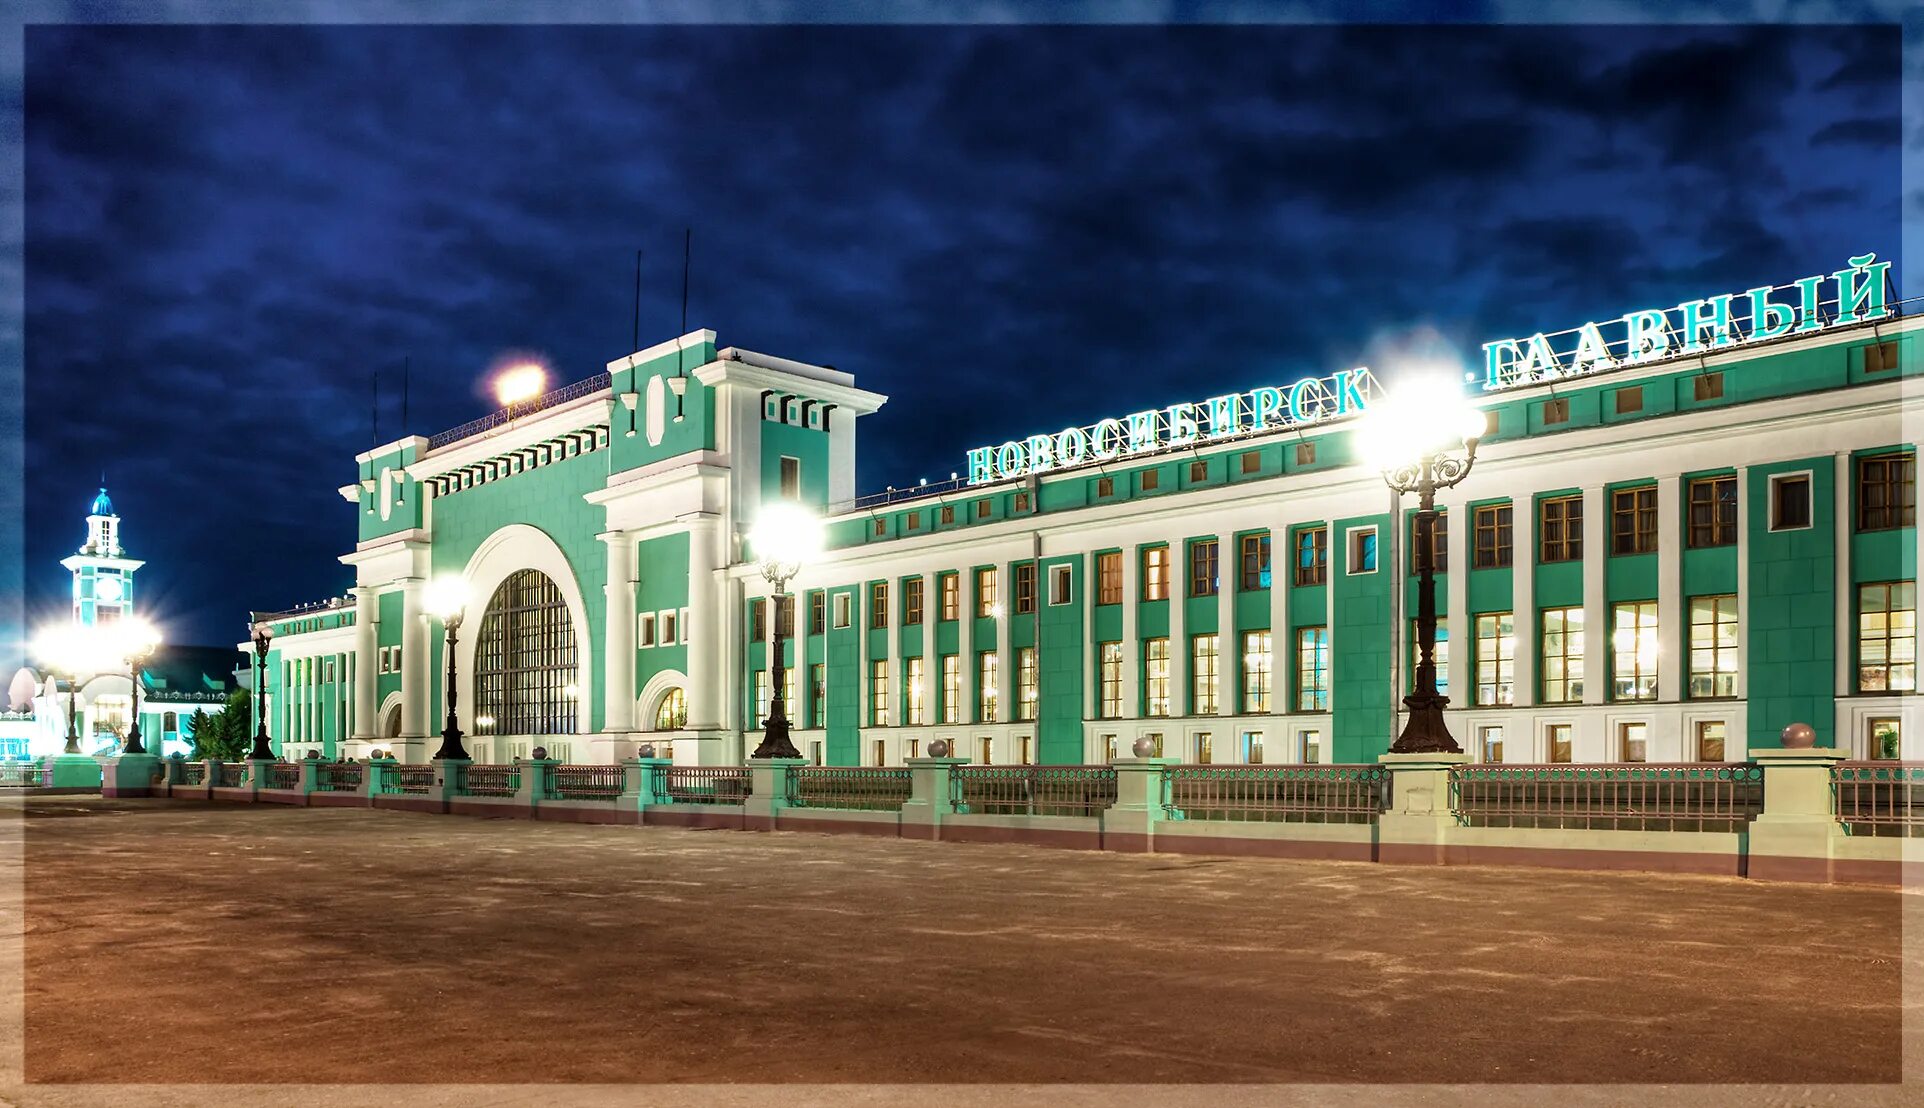 Вокзал новосибирск главный сайт. Новосибирский главный вокзал главный Новосибирск. Вокзал железнодорожной станции Новосибирск-главный. Железнодорожный вокзал Новосибирск главный. Новосибирск ЖД вокзал г Новосибирск.